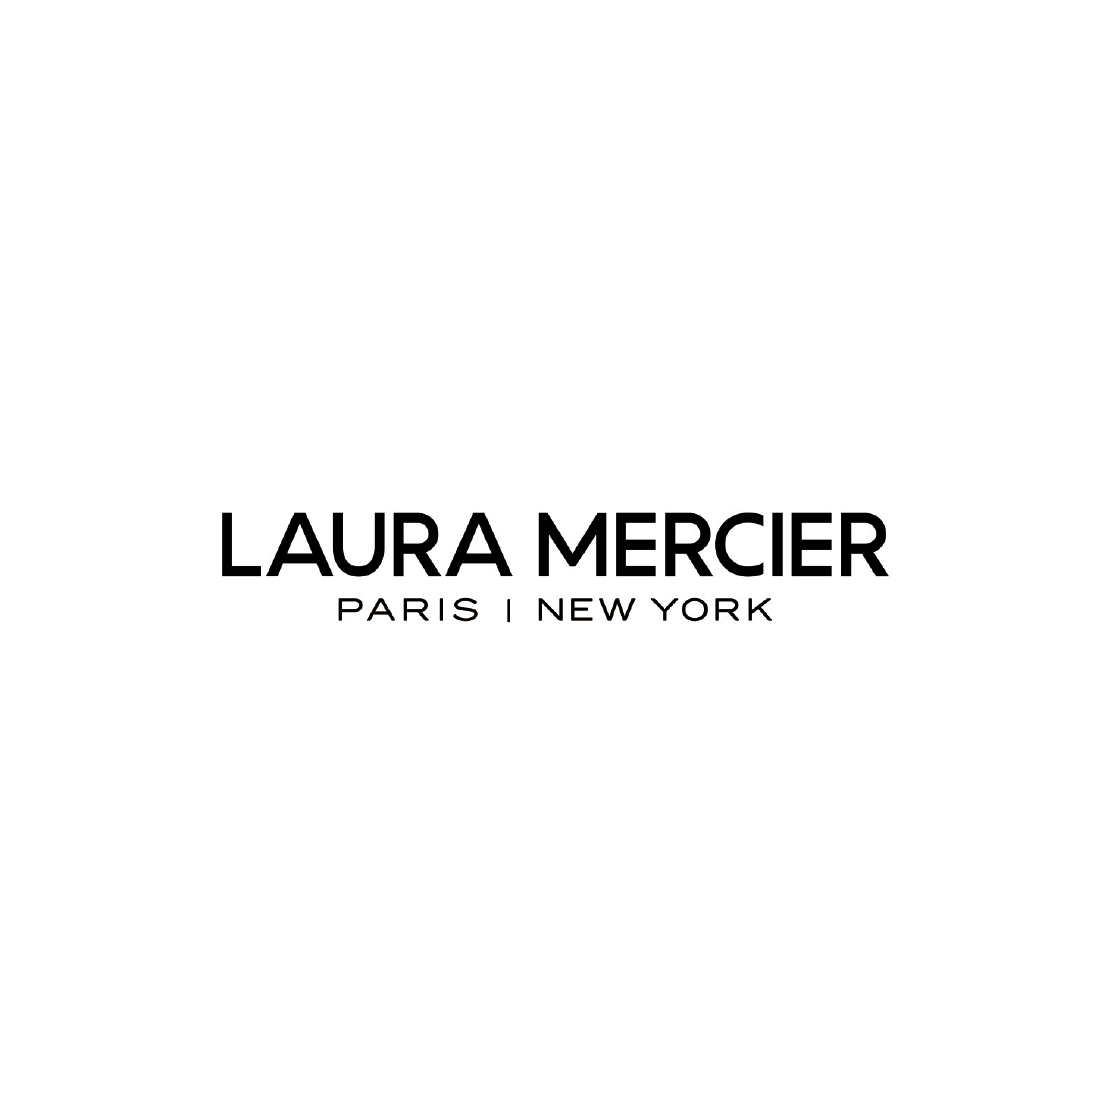 MOD-Logo_LauraMercier-web@2x.png